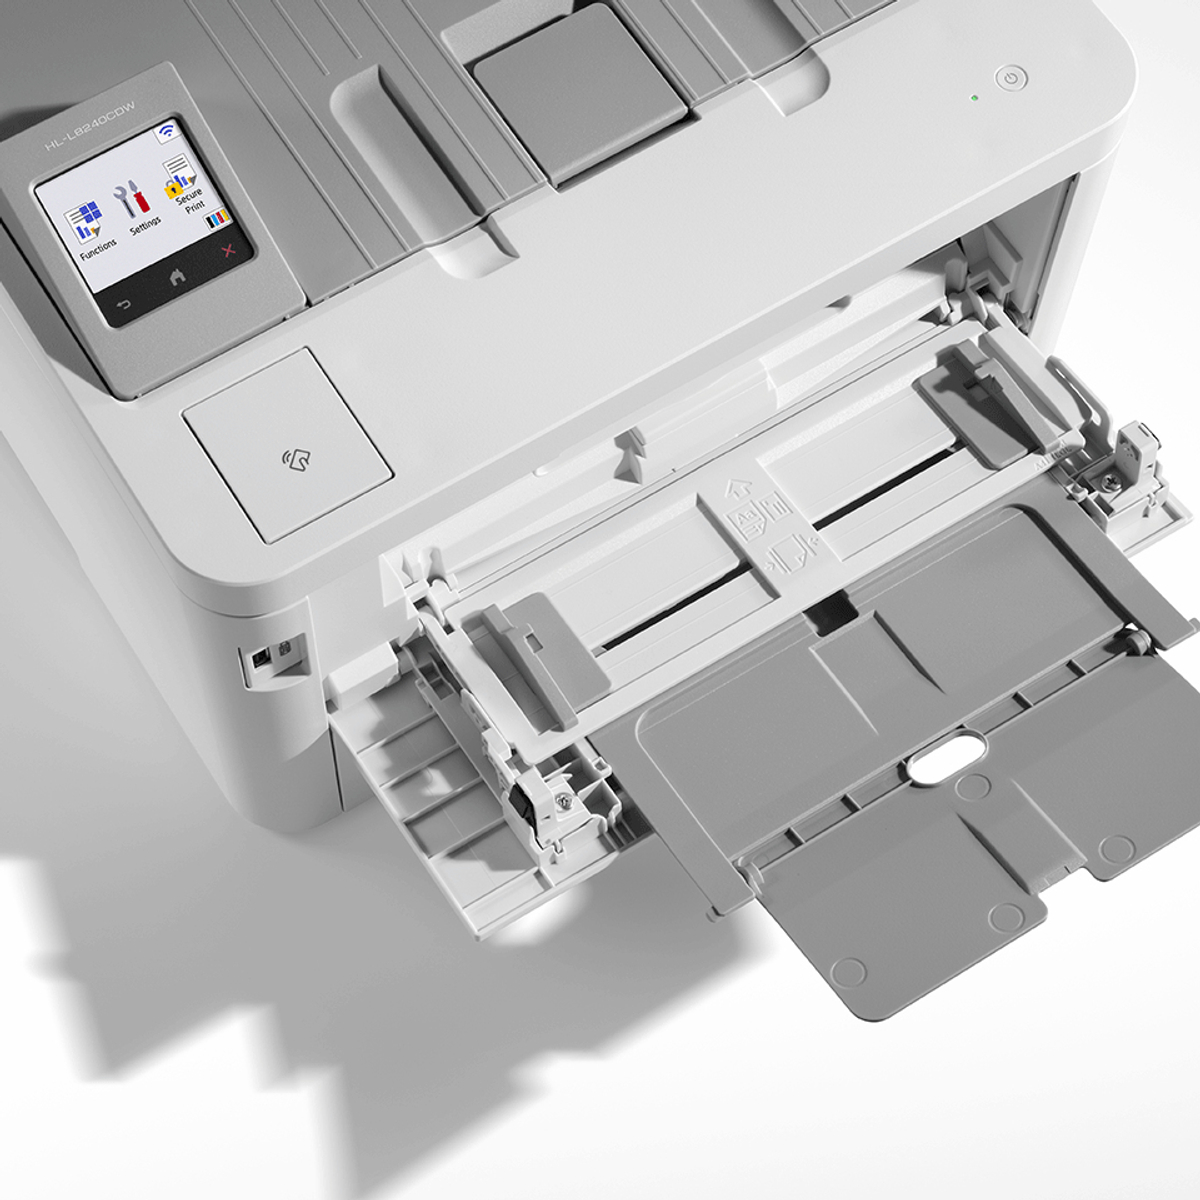 HL-L8240CDW A4 Colour Laser Printer